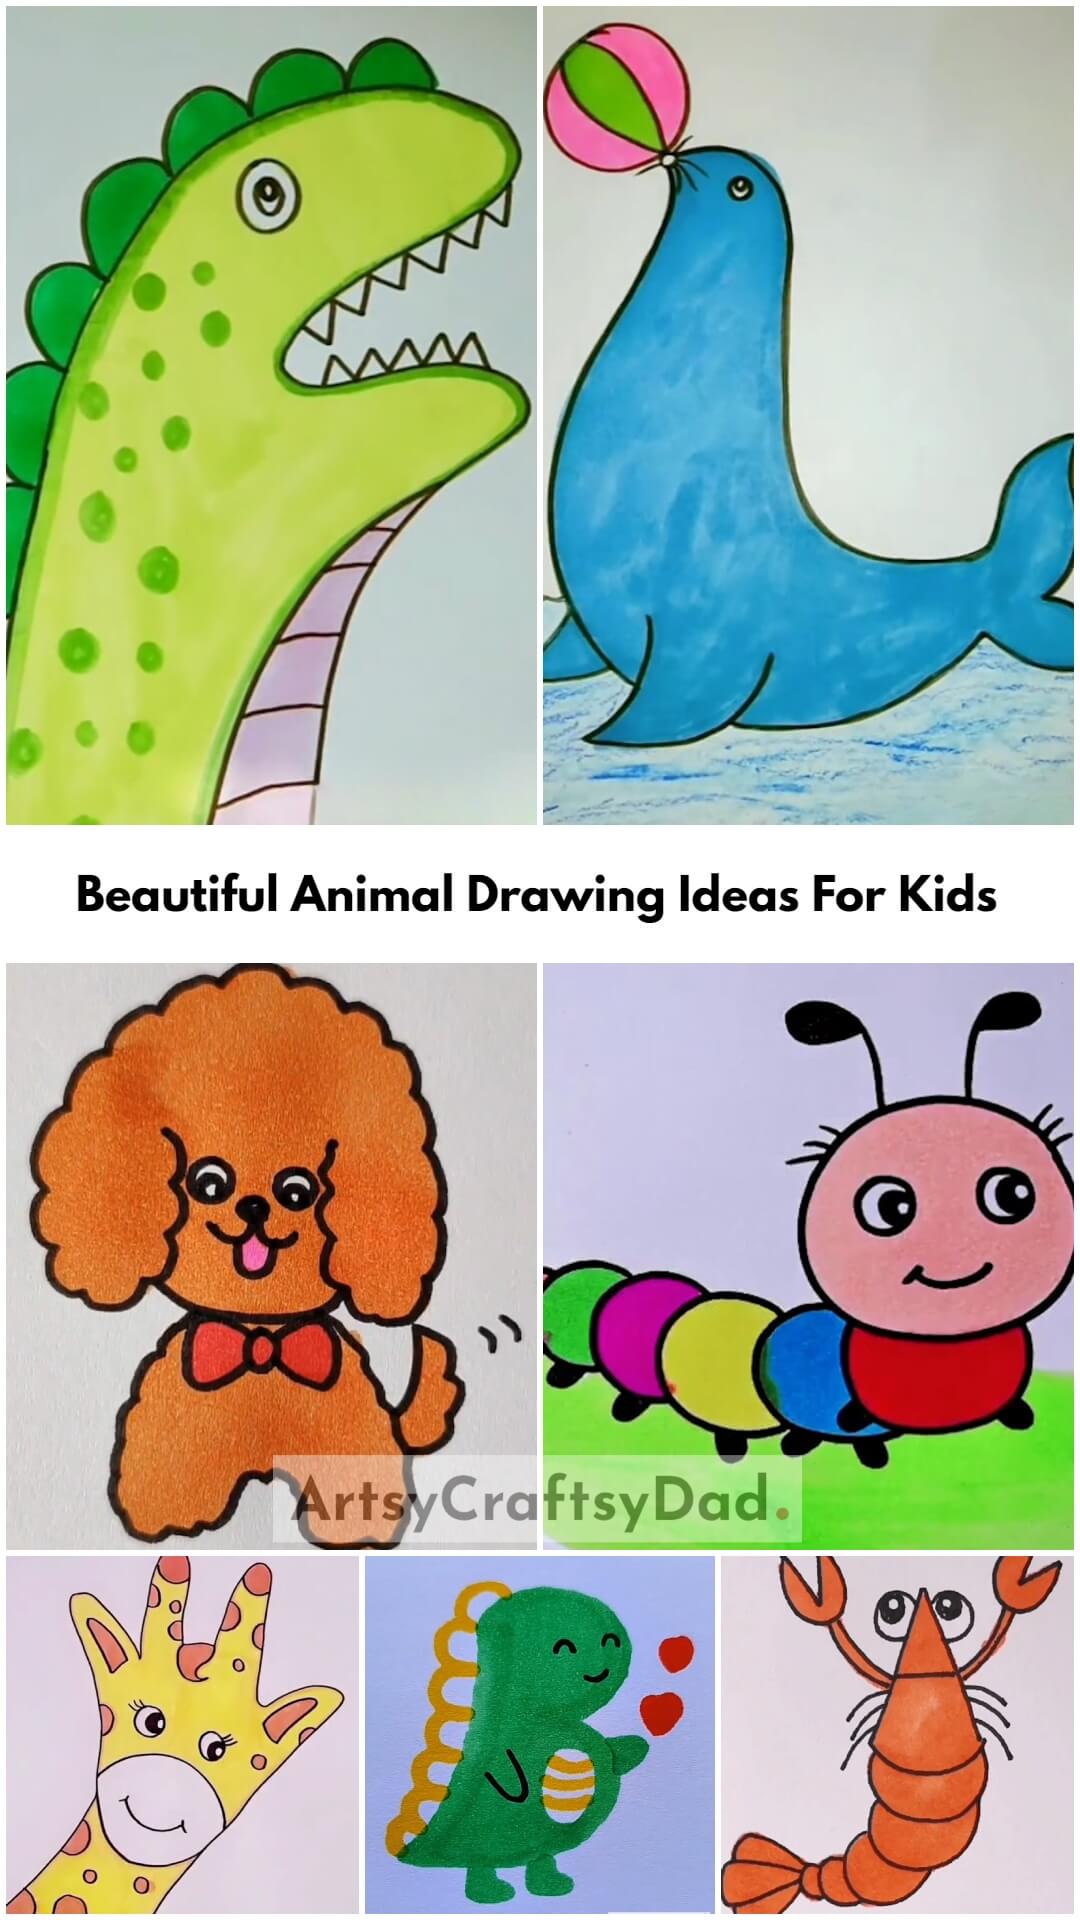 Beautiful Animal Drawing Ideas For Kids